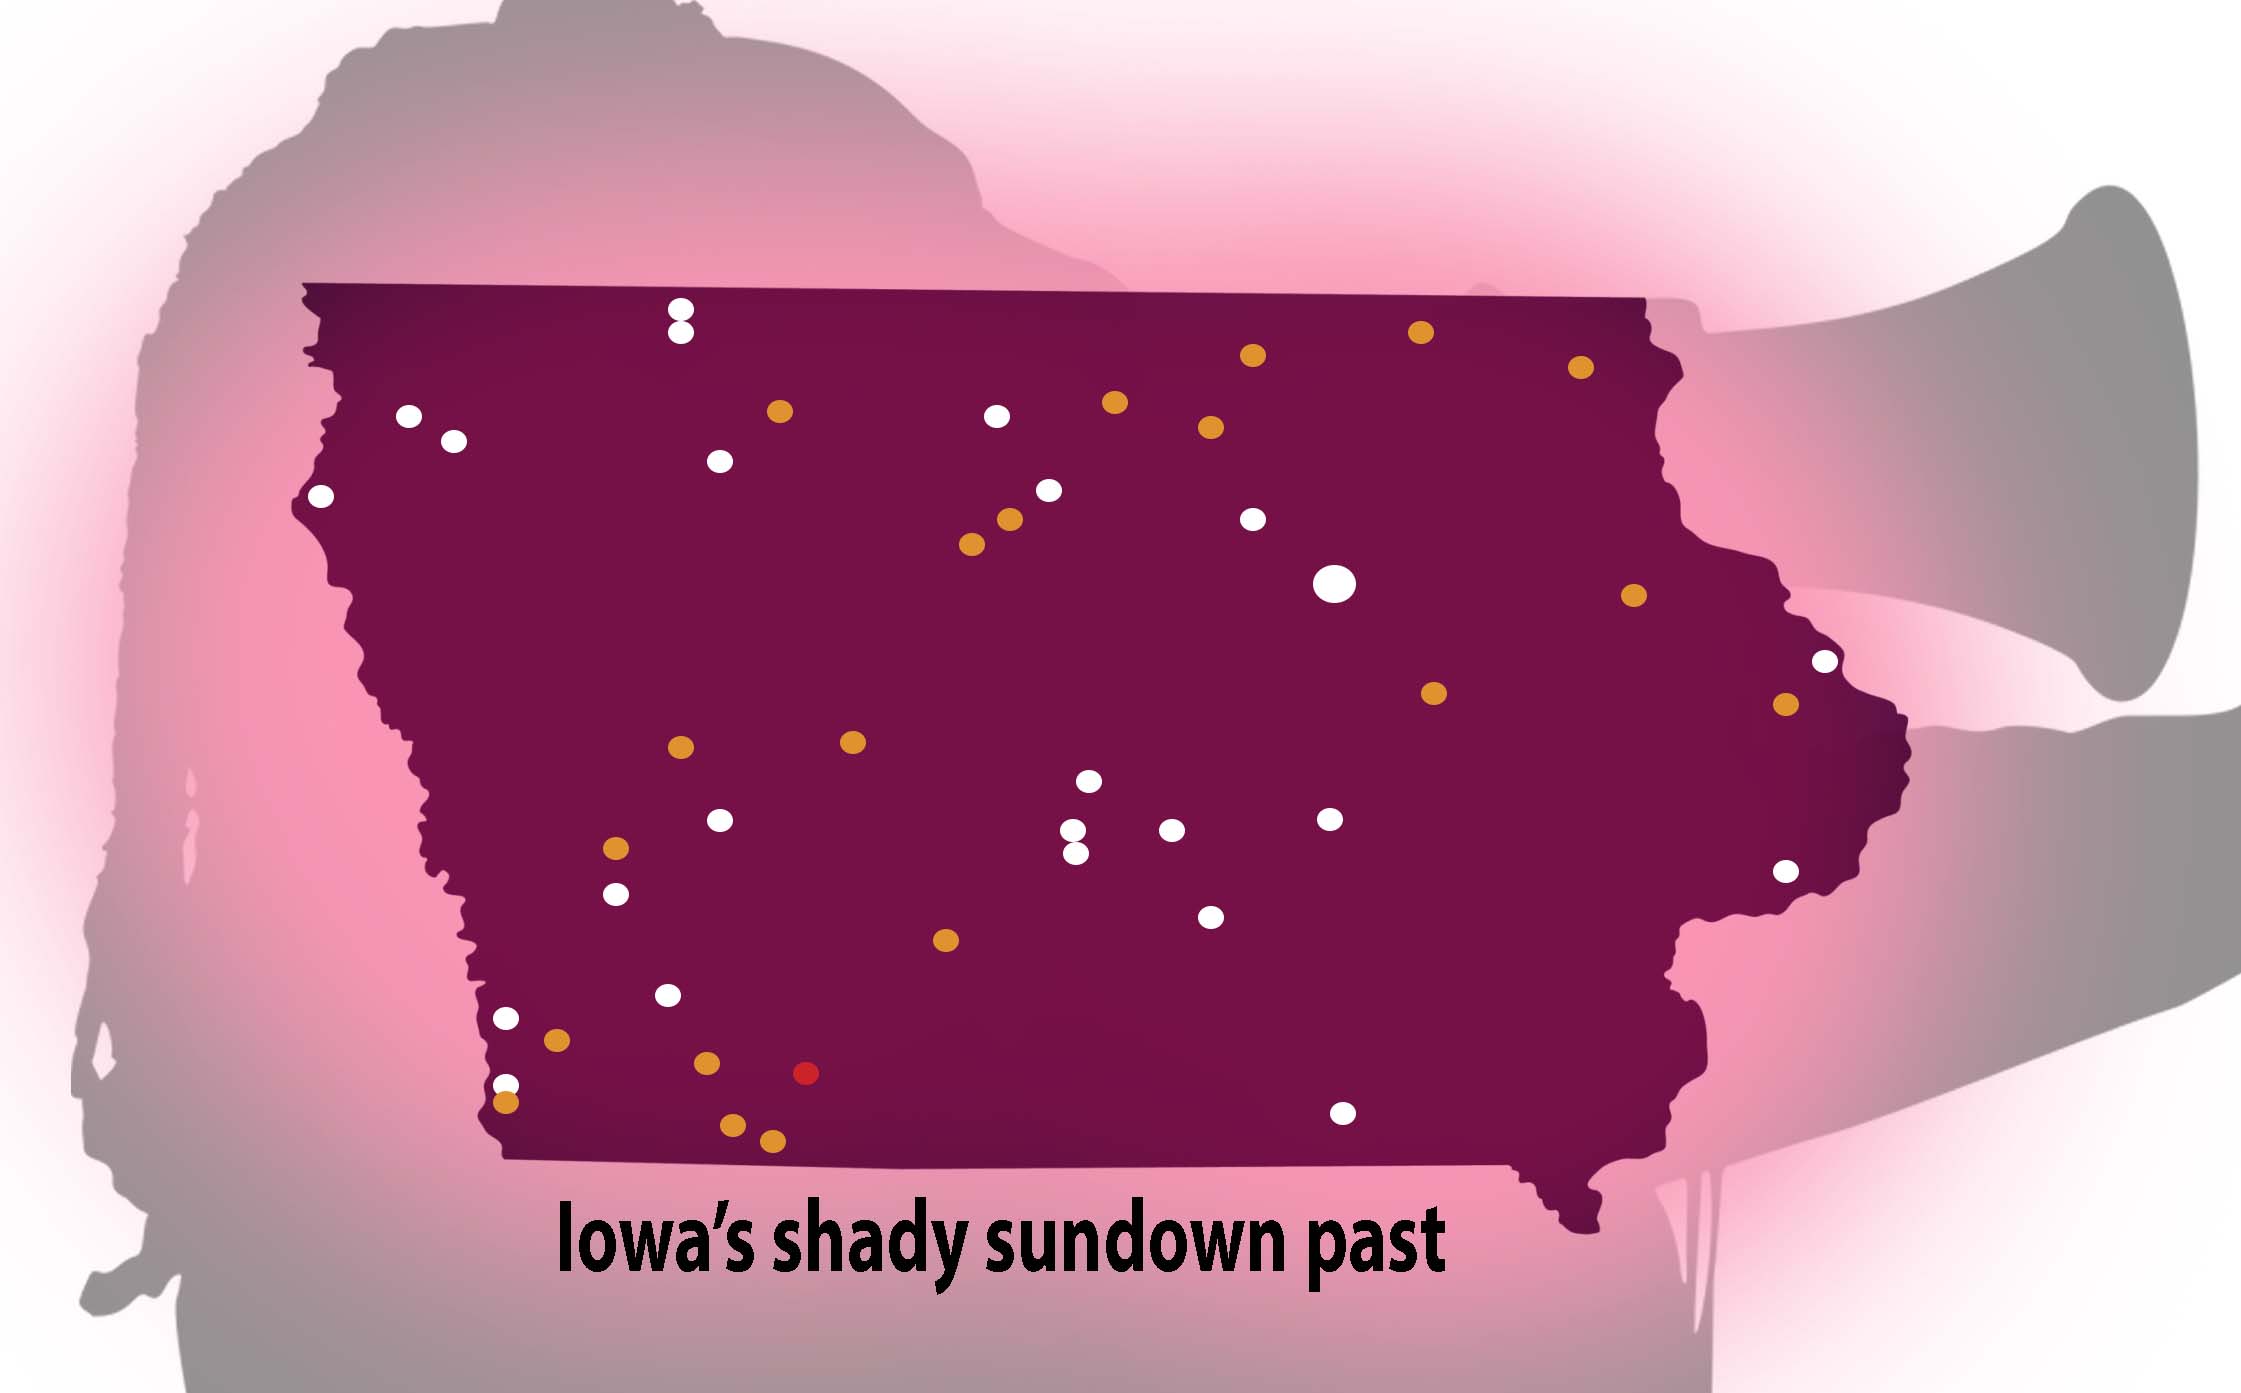 Emergency! Iowa’s sundown past of racism is still hurting us